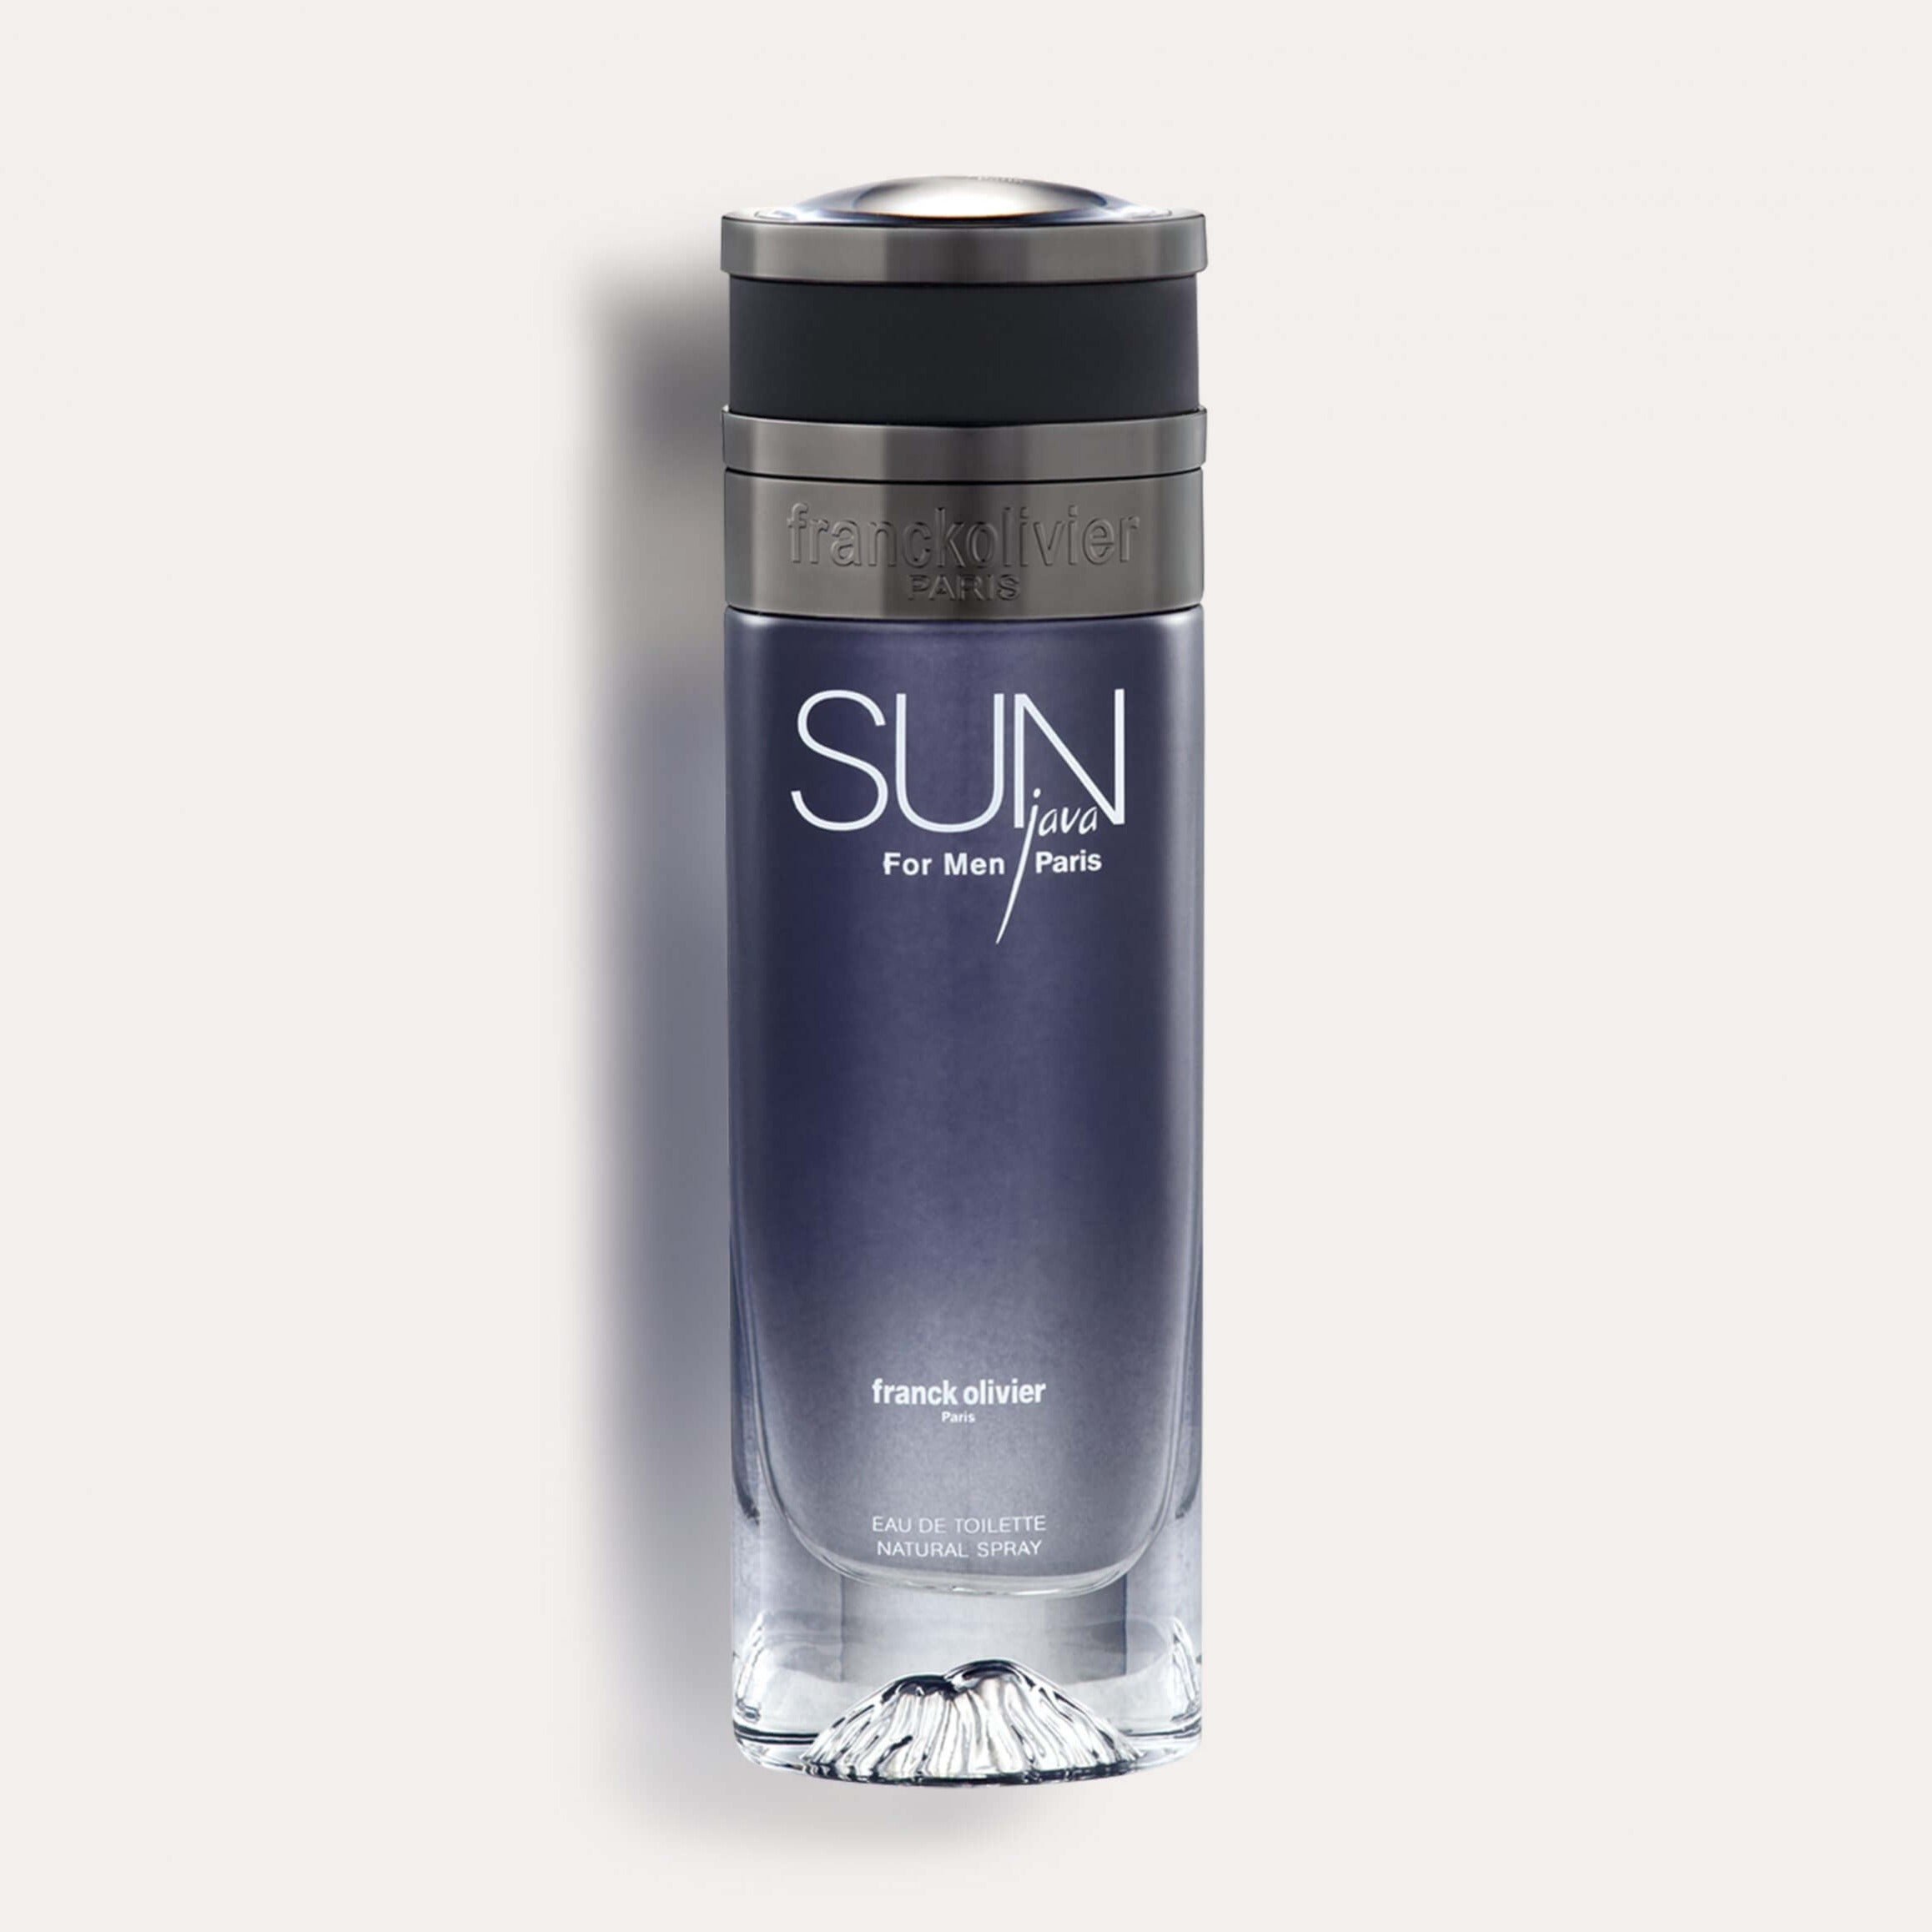 Franck Olivier Premium Sun Java Deodorant Stick | My Perfume Shop Australia